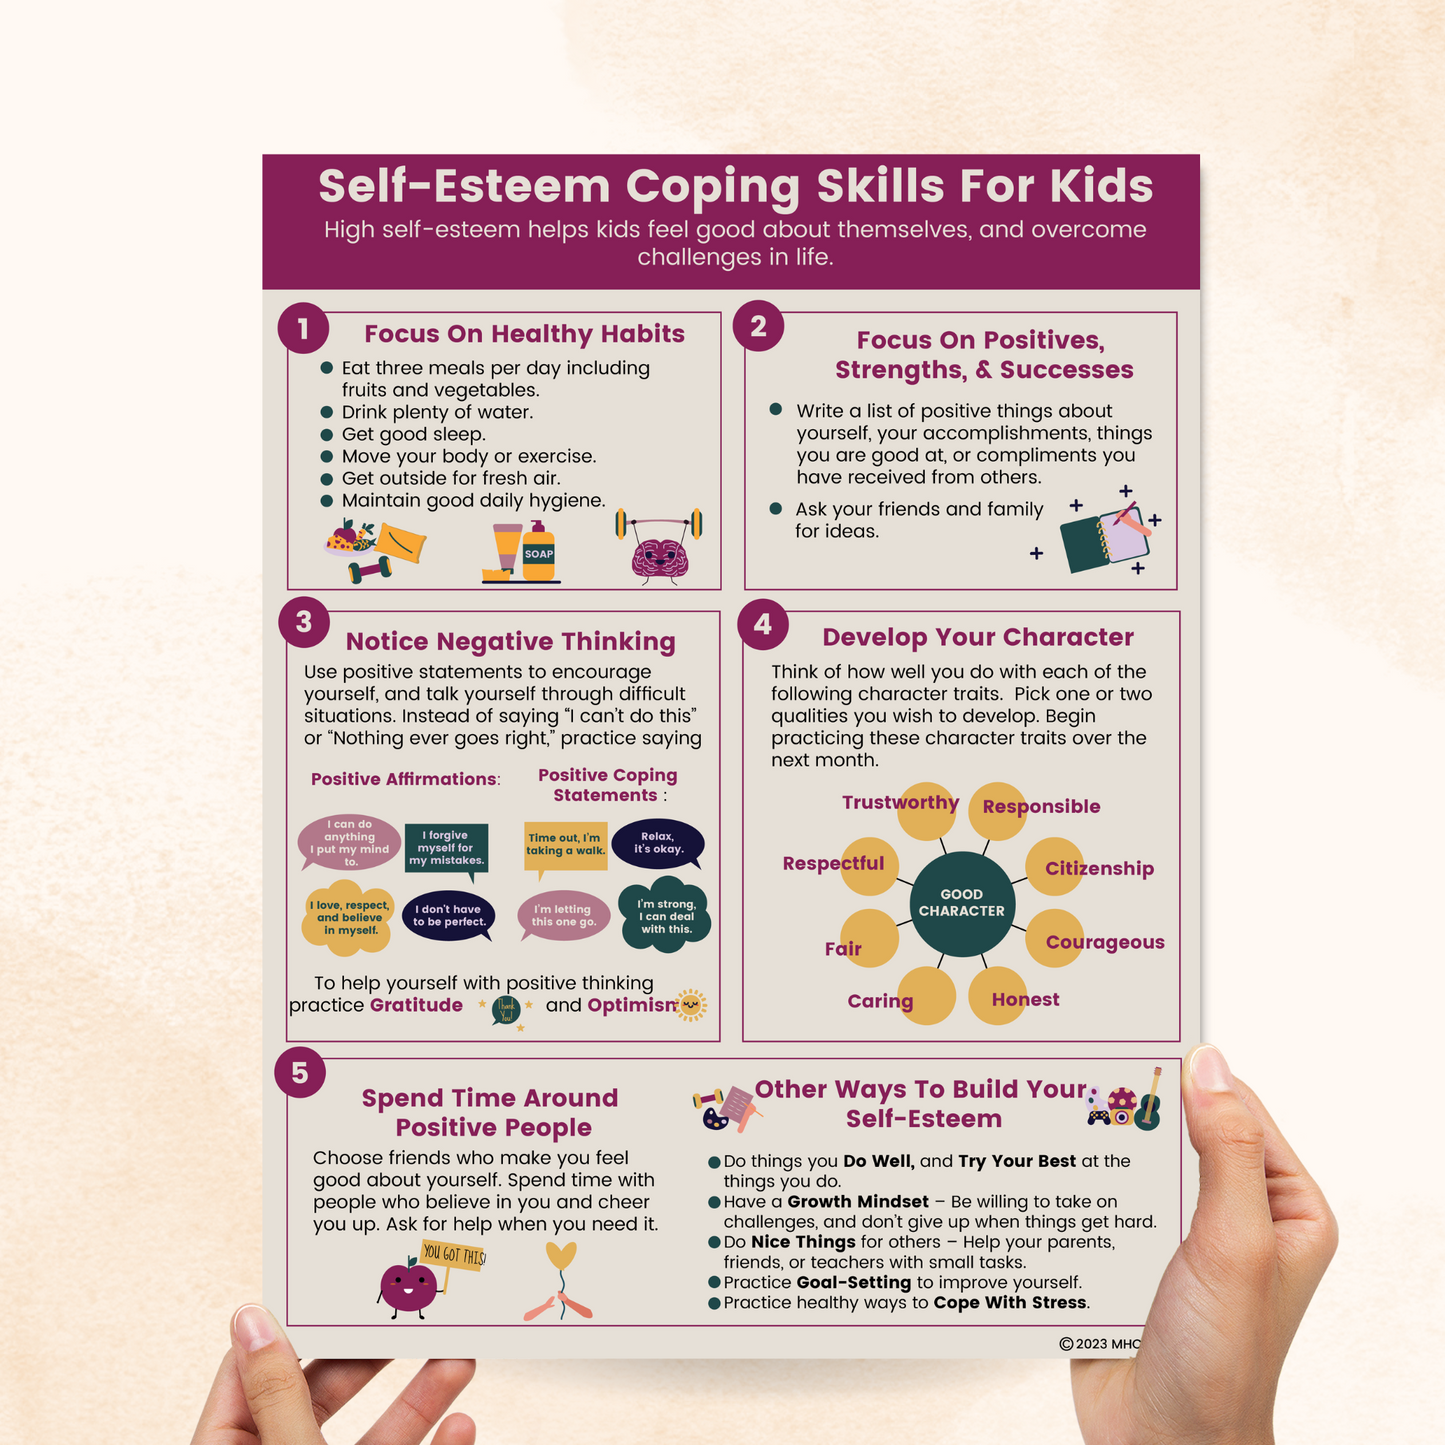 Self-Esteem Coping Skills for Kids